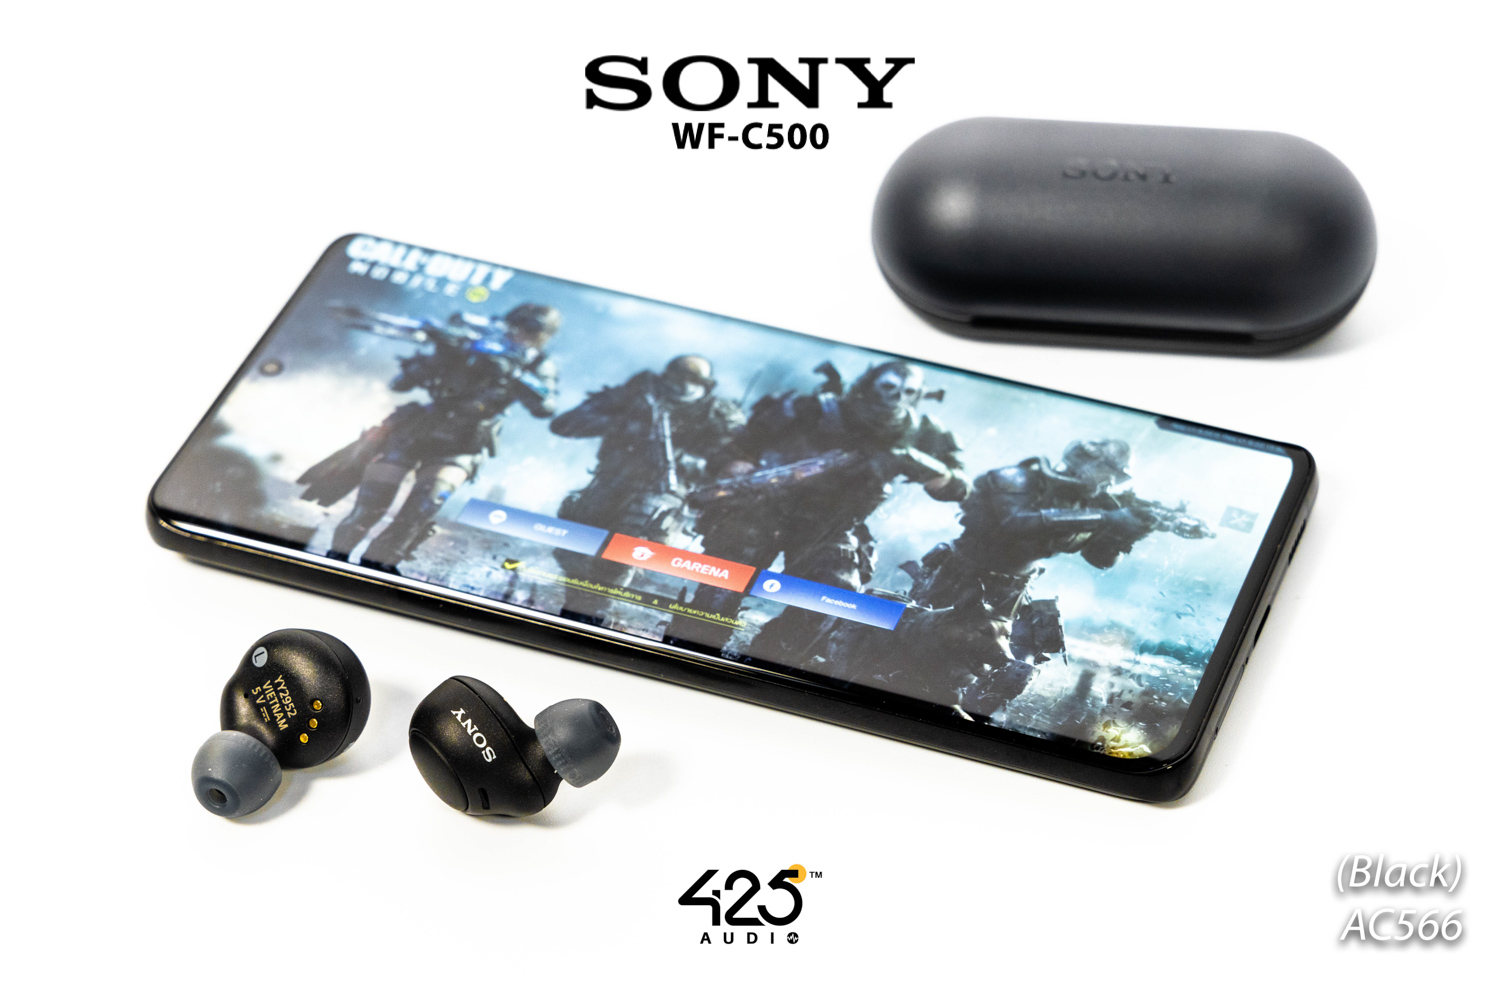 Sony WF-C500,หูฟัง sony,หูฟังไร้สาย Sony WF-C500,Sony WF-C500 True Wireless,หูฟังไร้สาย,หูฟังบลูทูธ,fast pair,swift pair